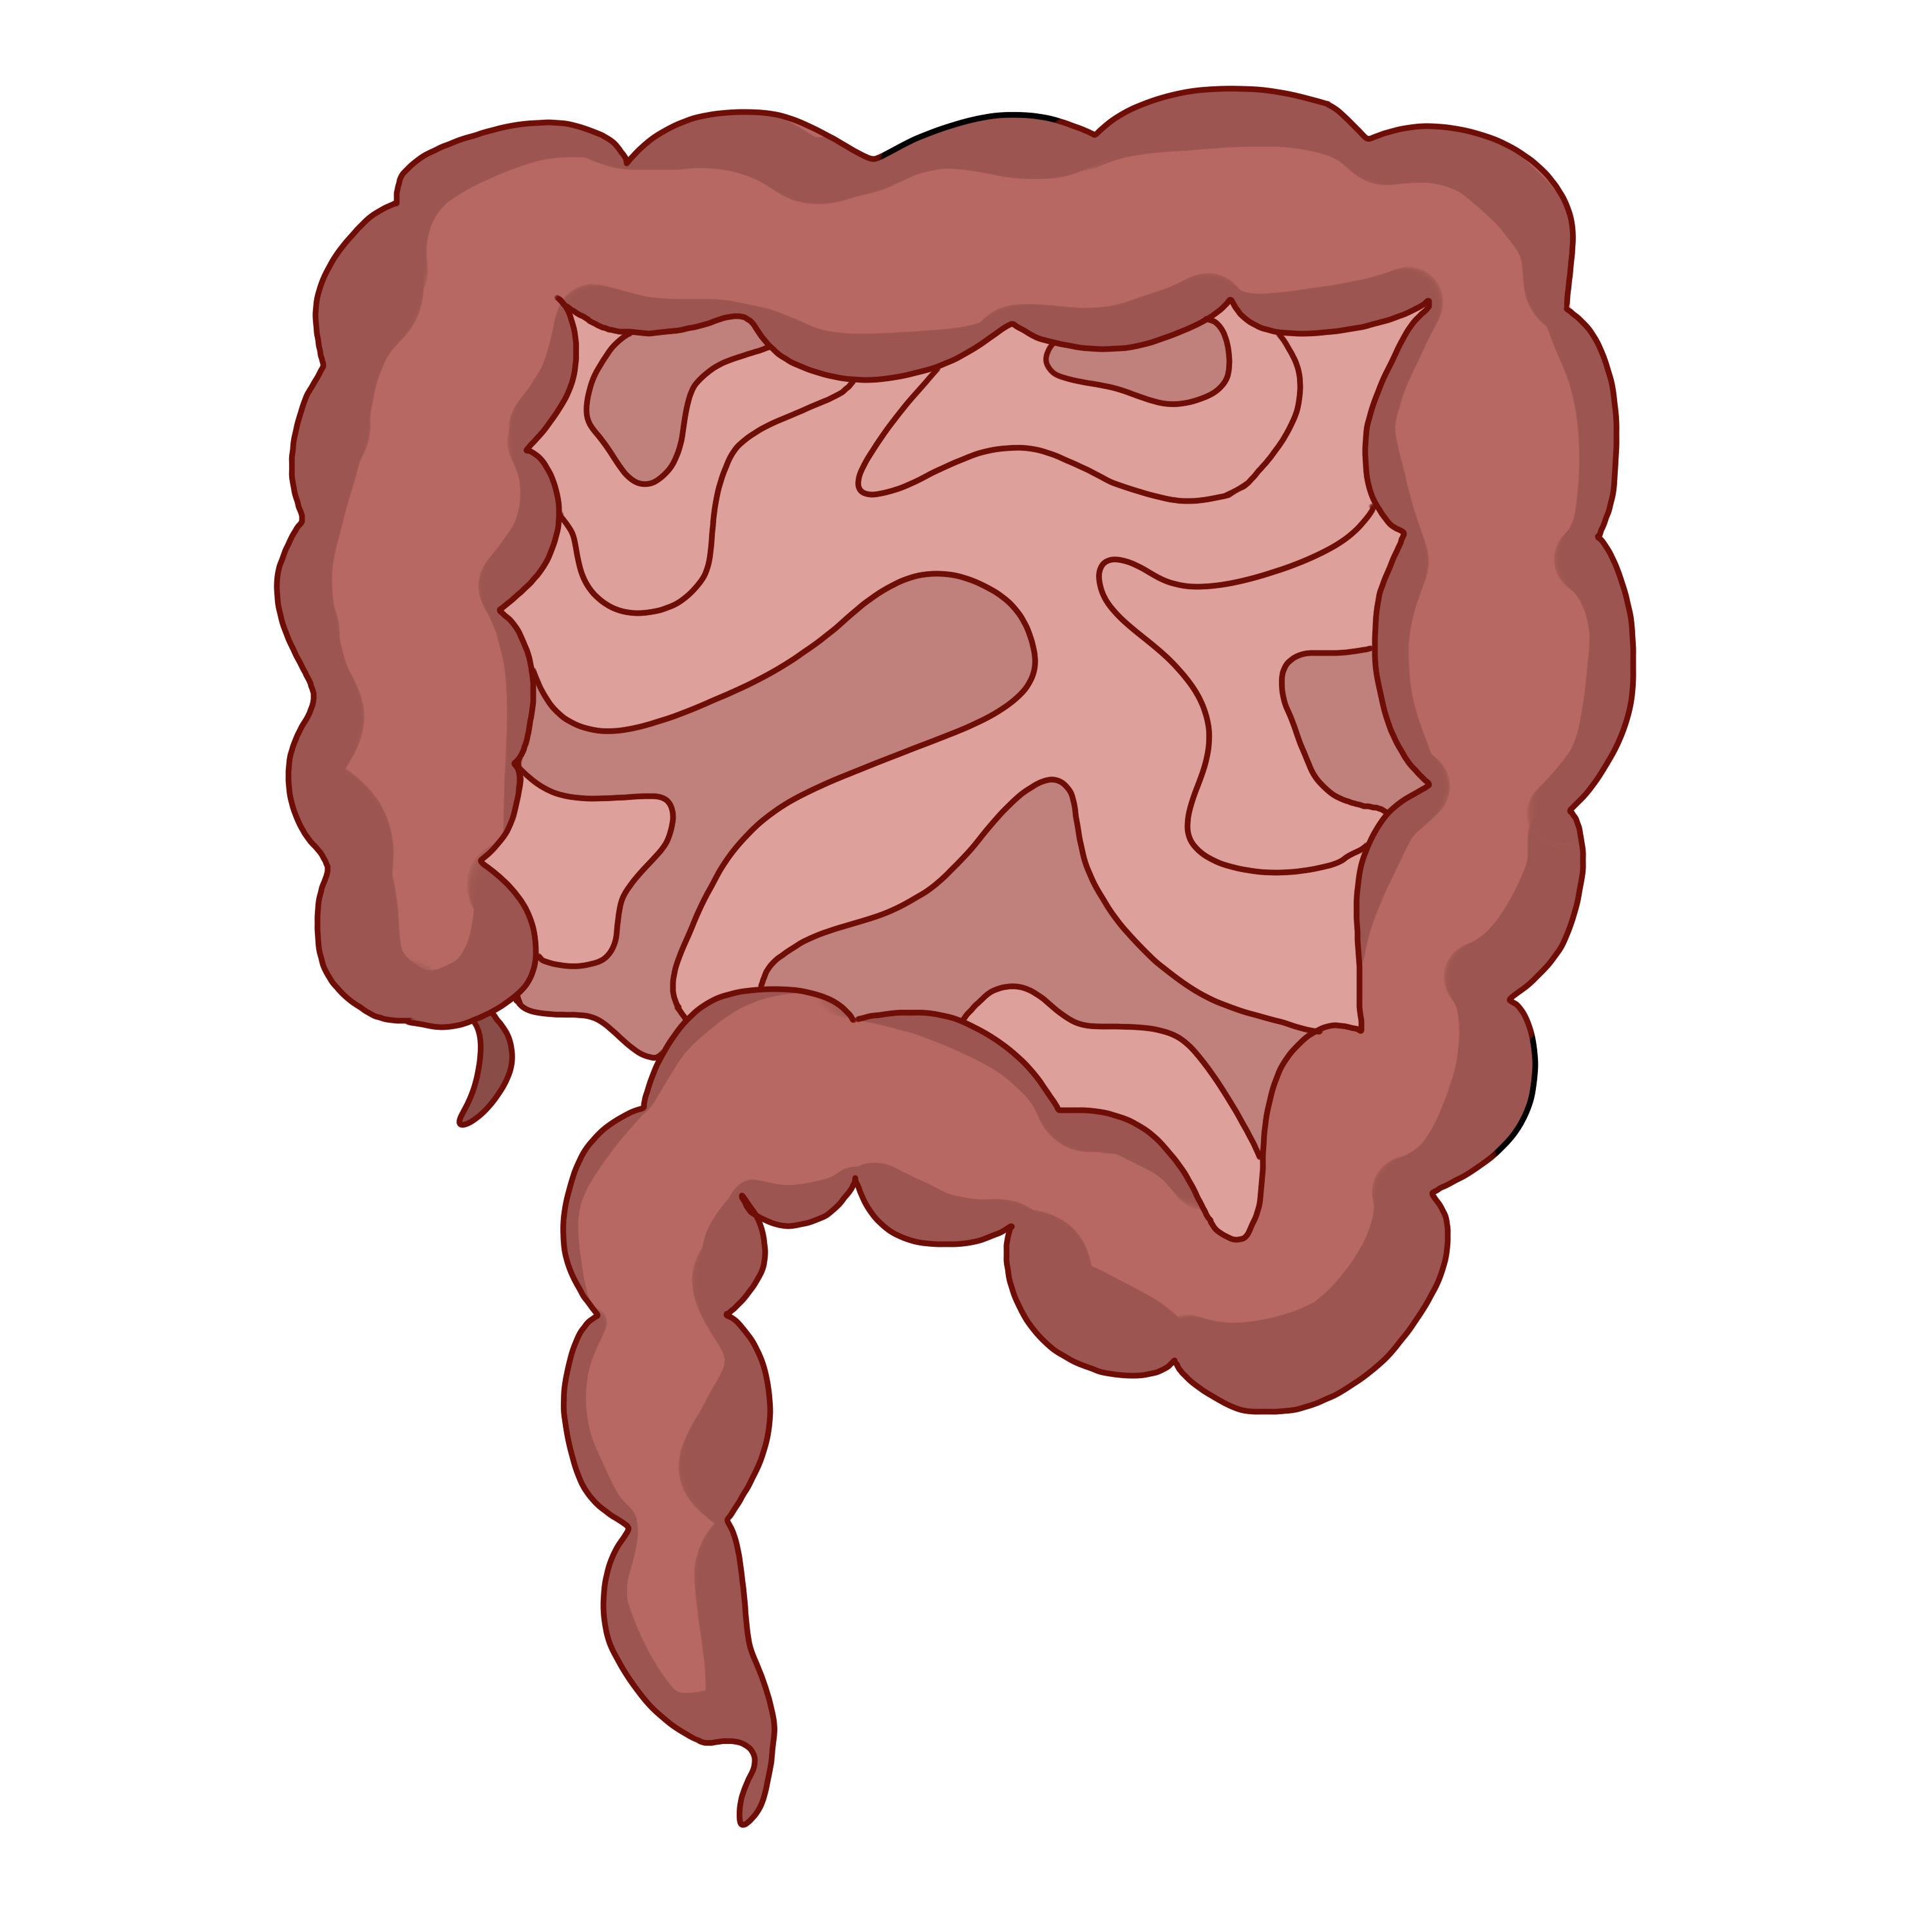 Pngtreehuman intestine organ illustration 4755417